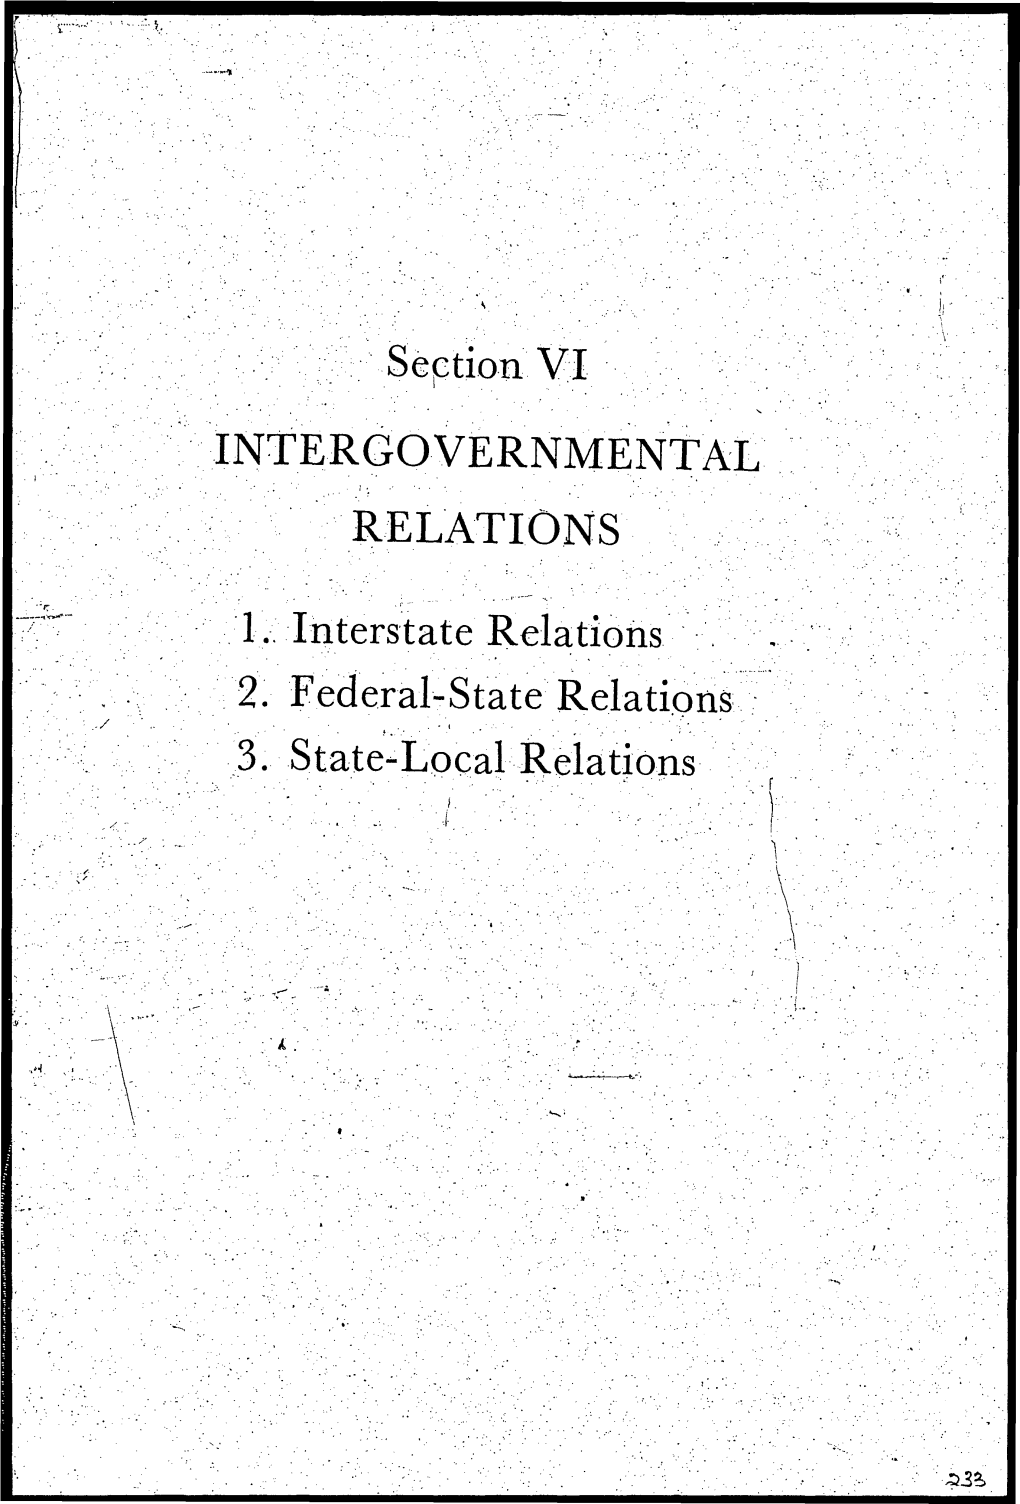 Intergovernmental Relations 241